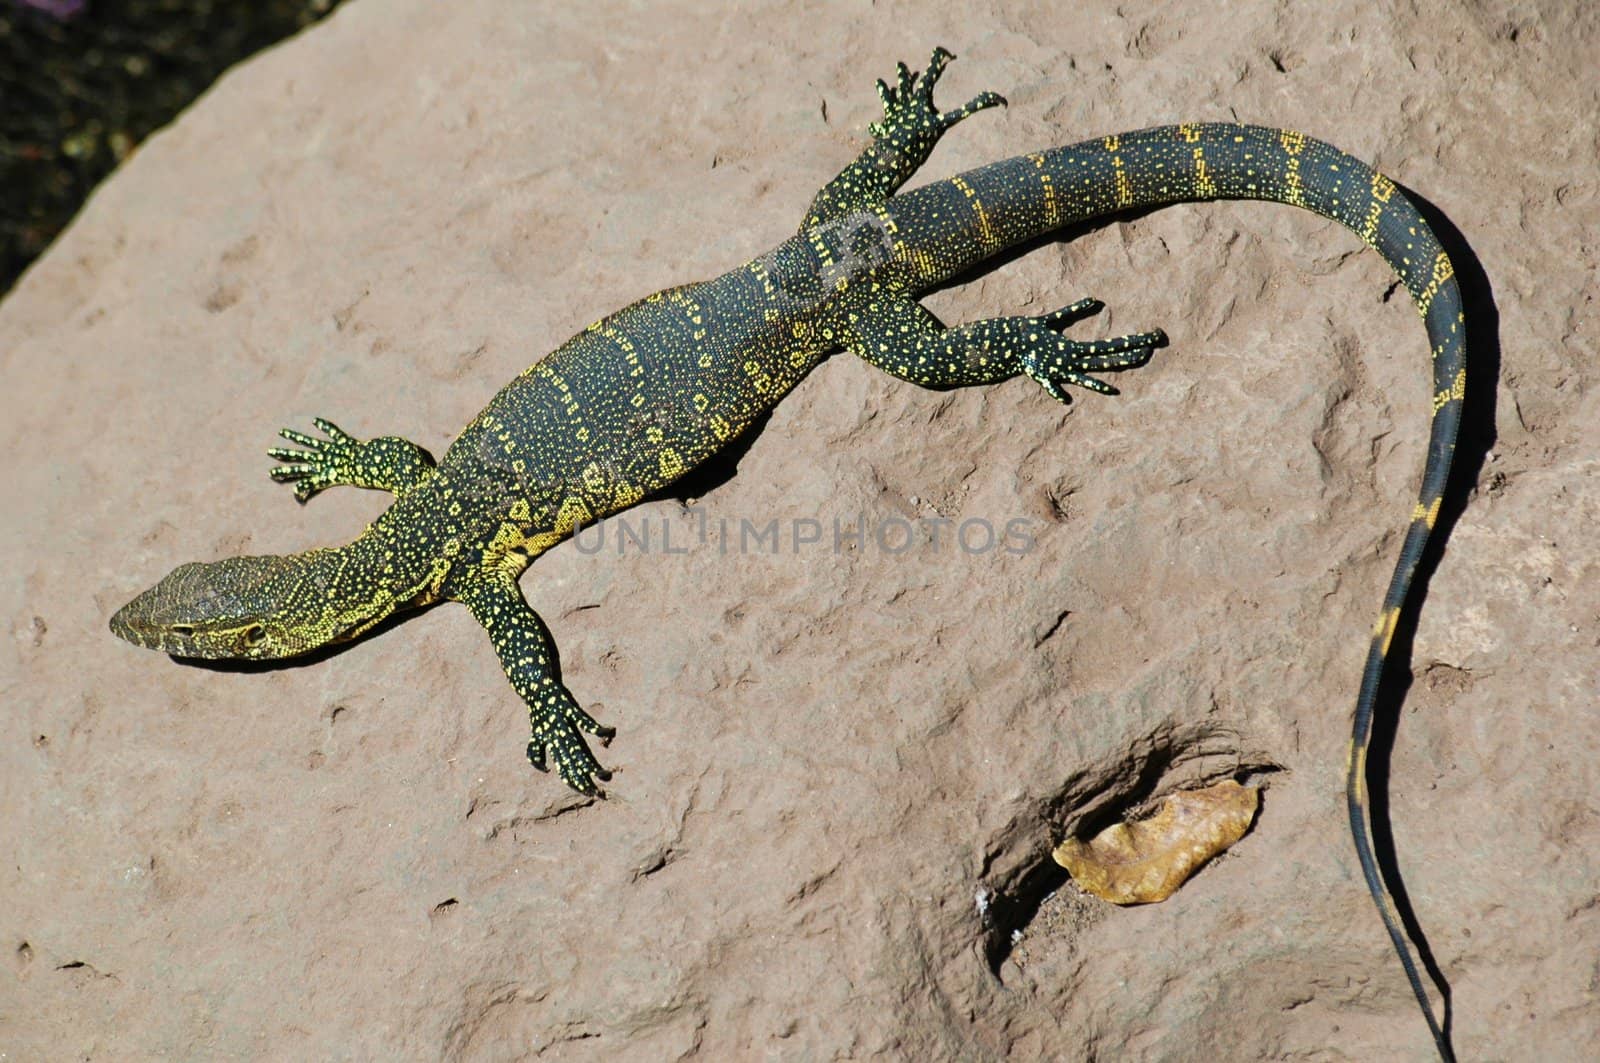 Lizard taking sun by rigamondis